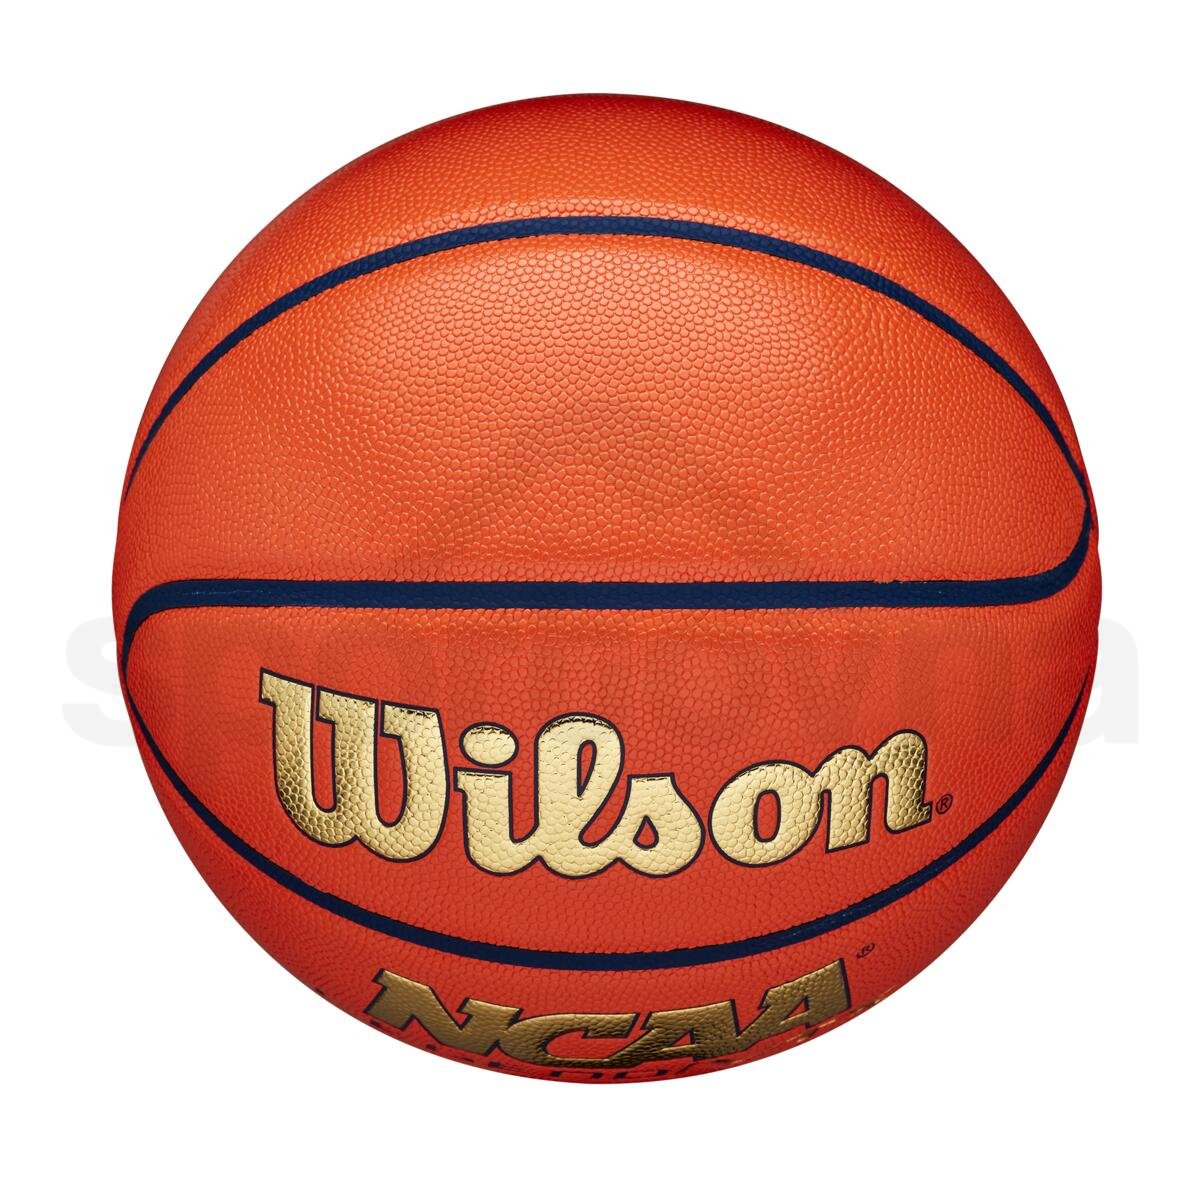 Míč Wilson NCAA Legend Vtx Bskt - oranžová/zlatá